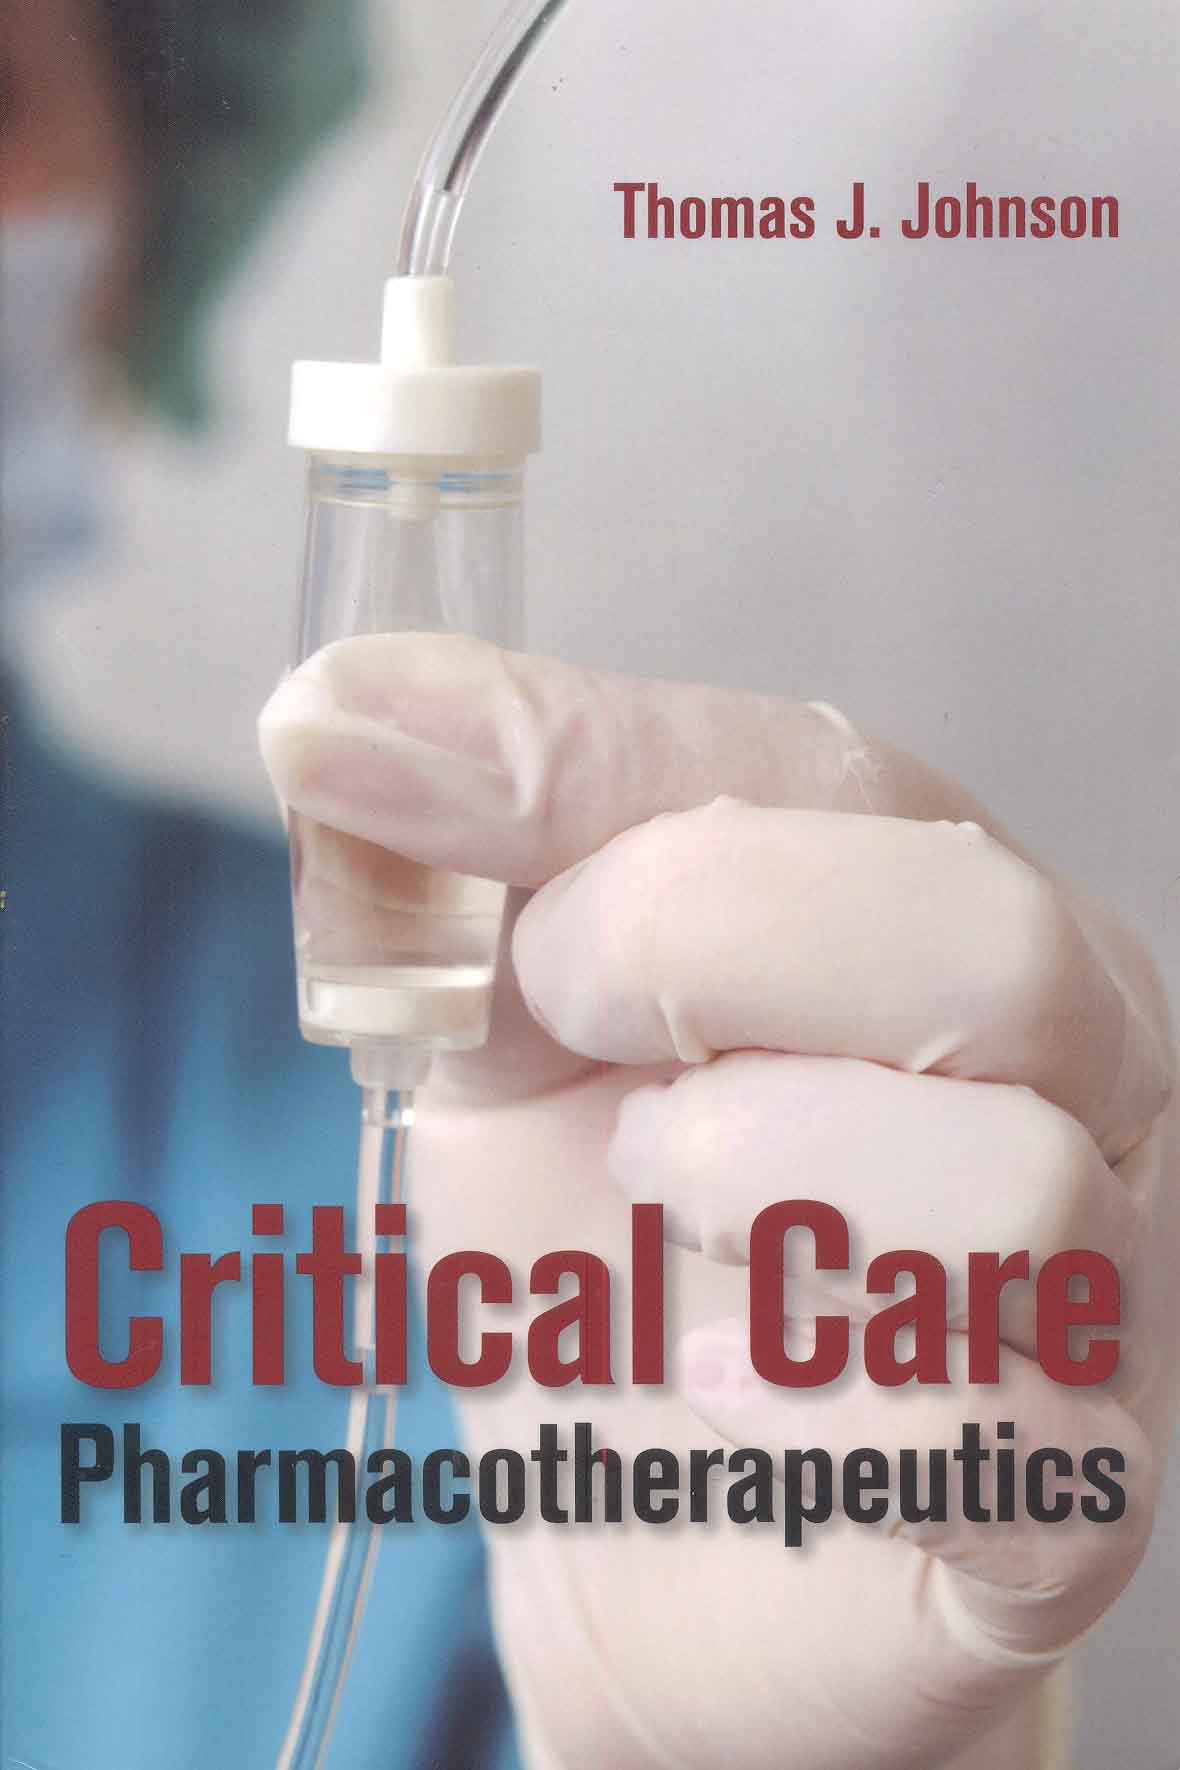 Critical care pharmacotherapeutics